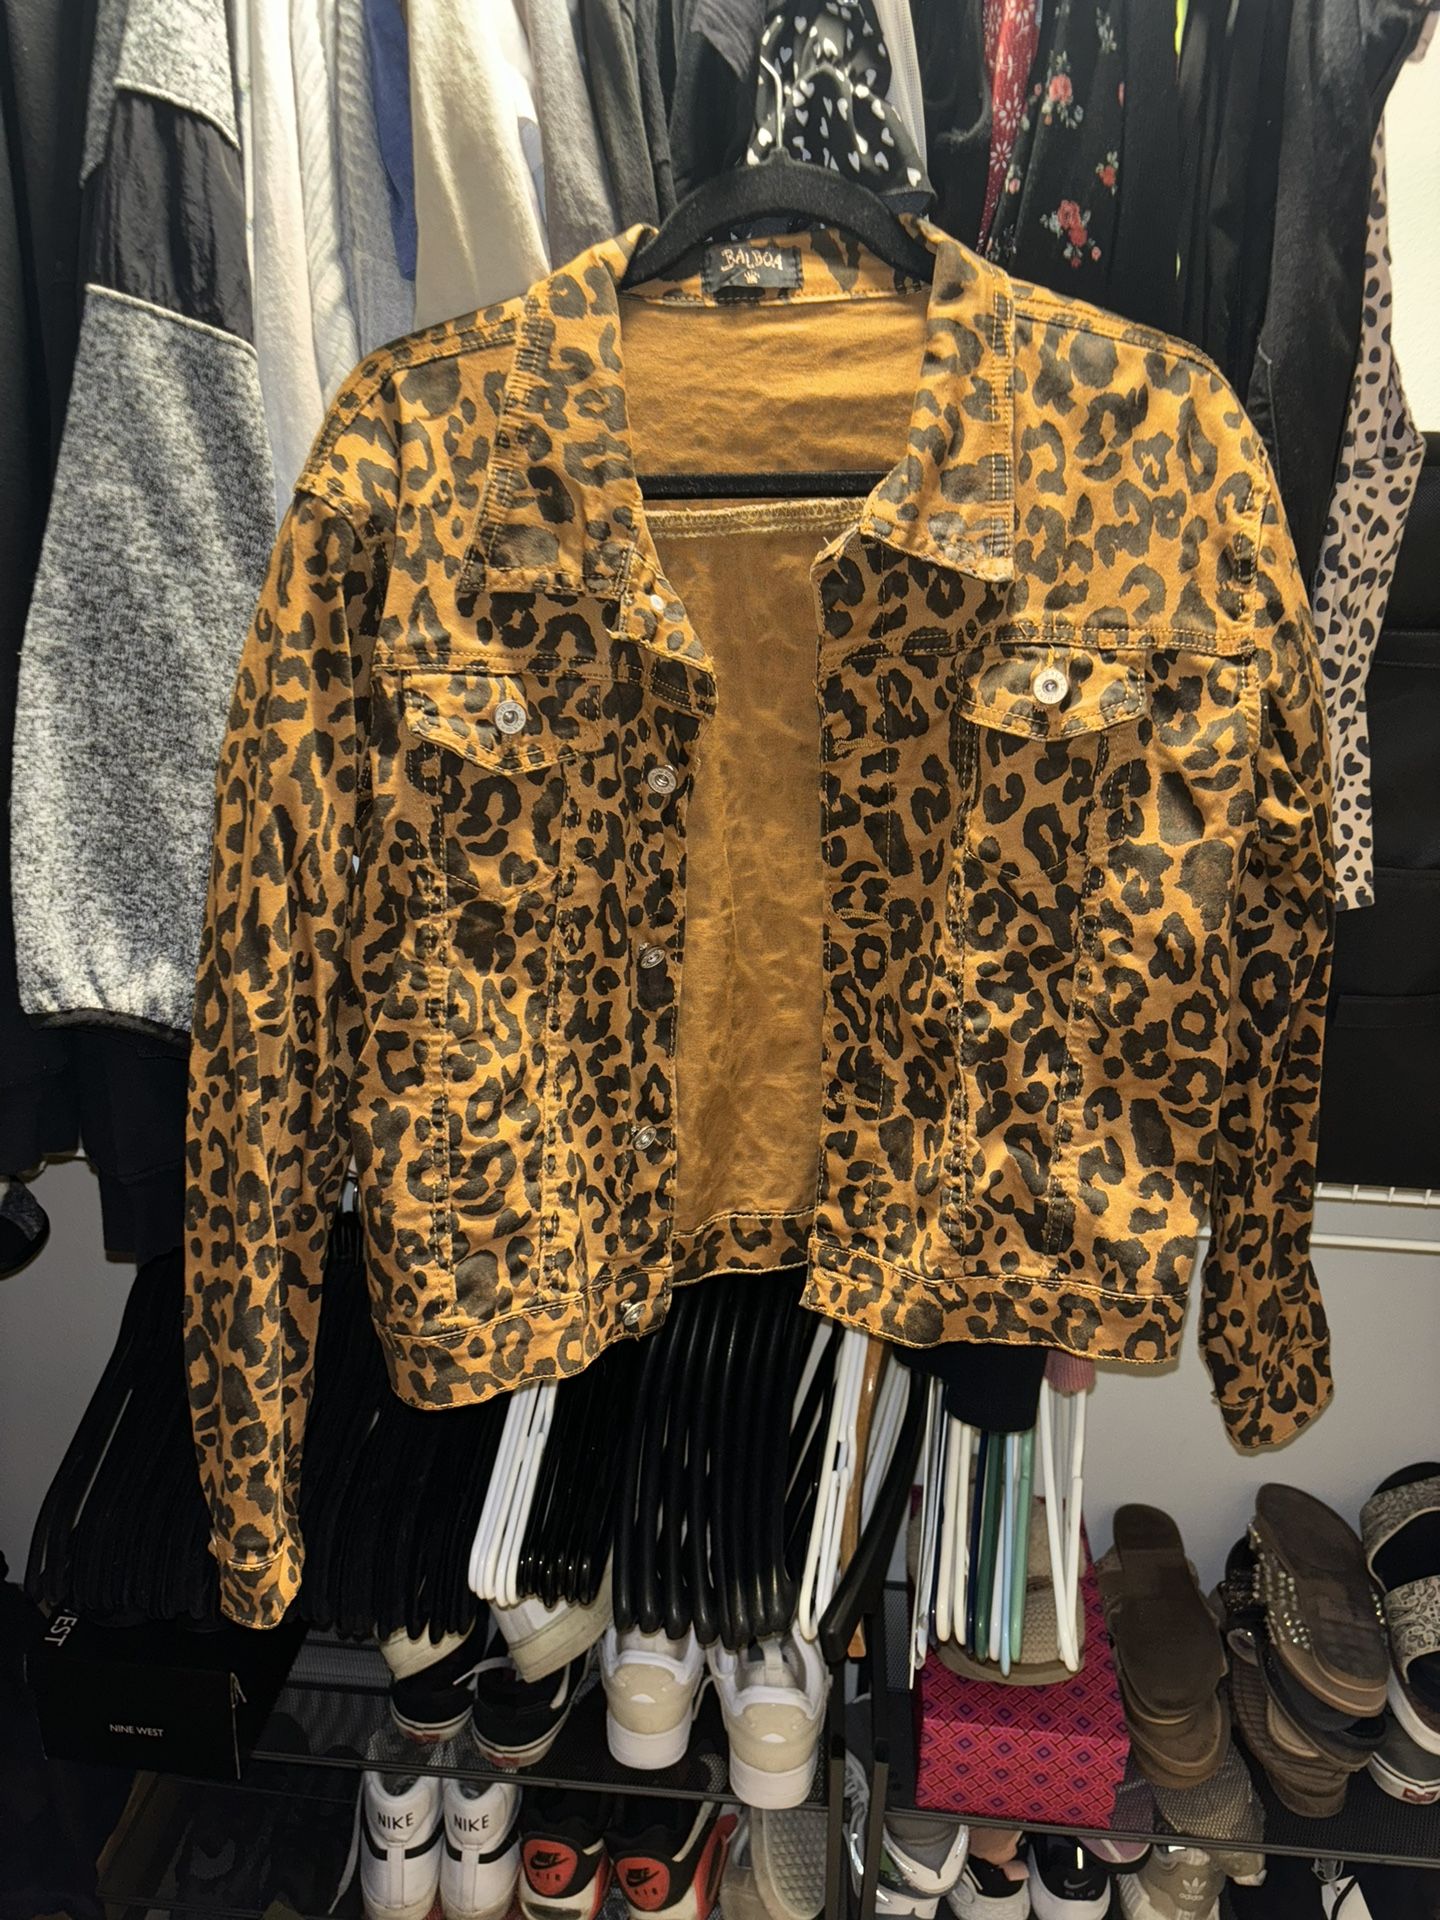 Windsor Balboa cheetah print jean jacket